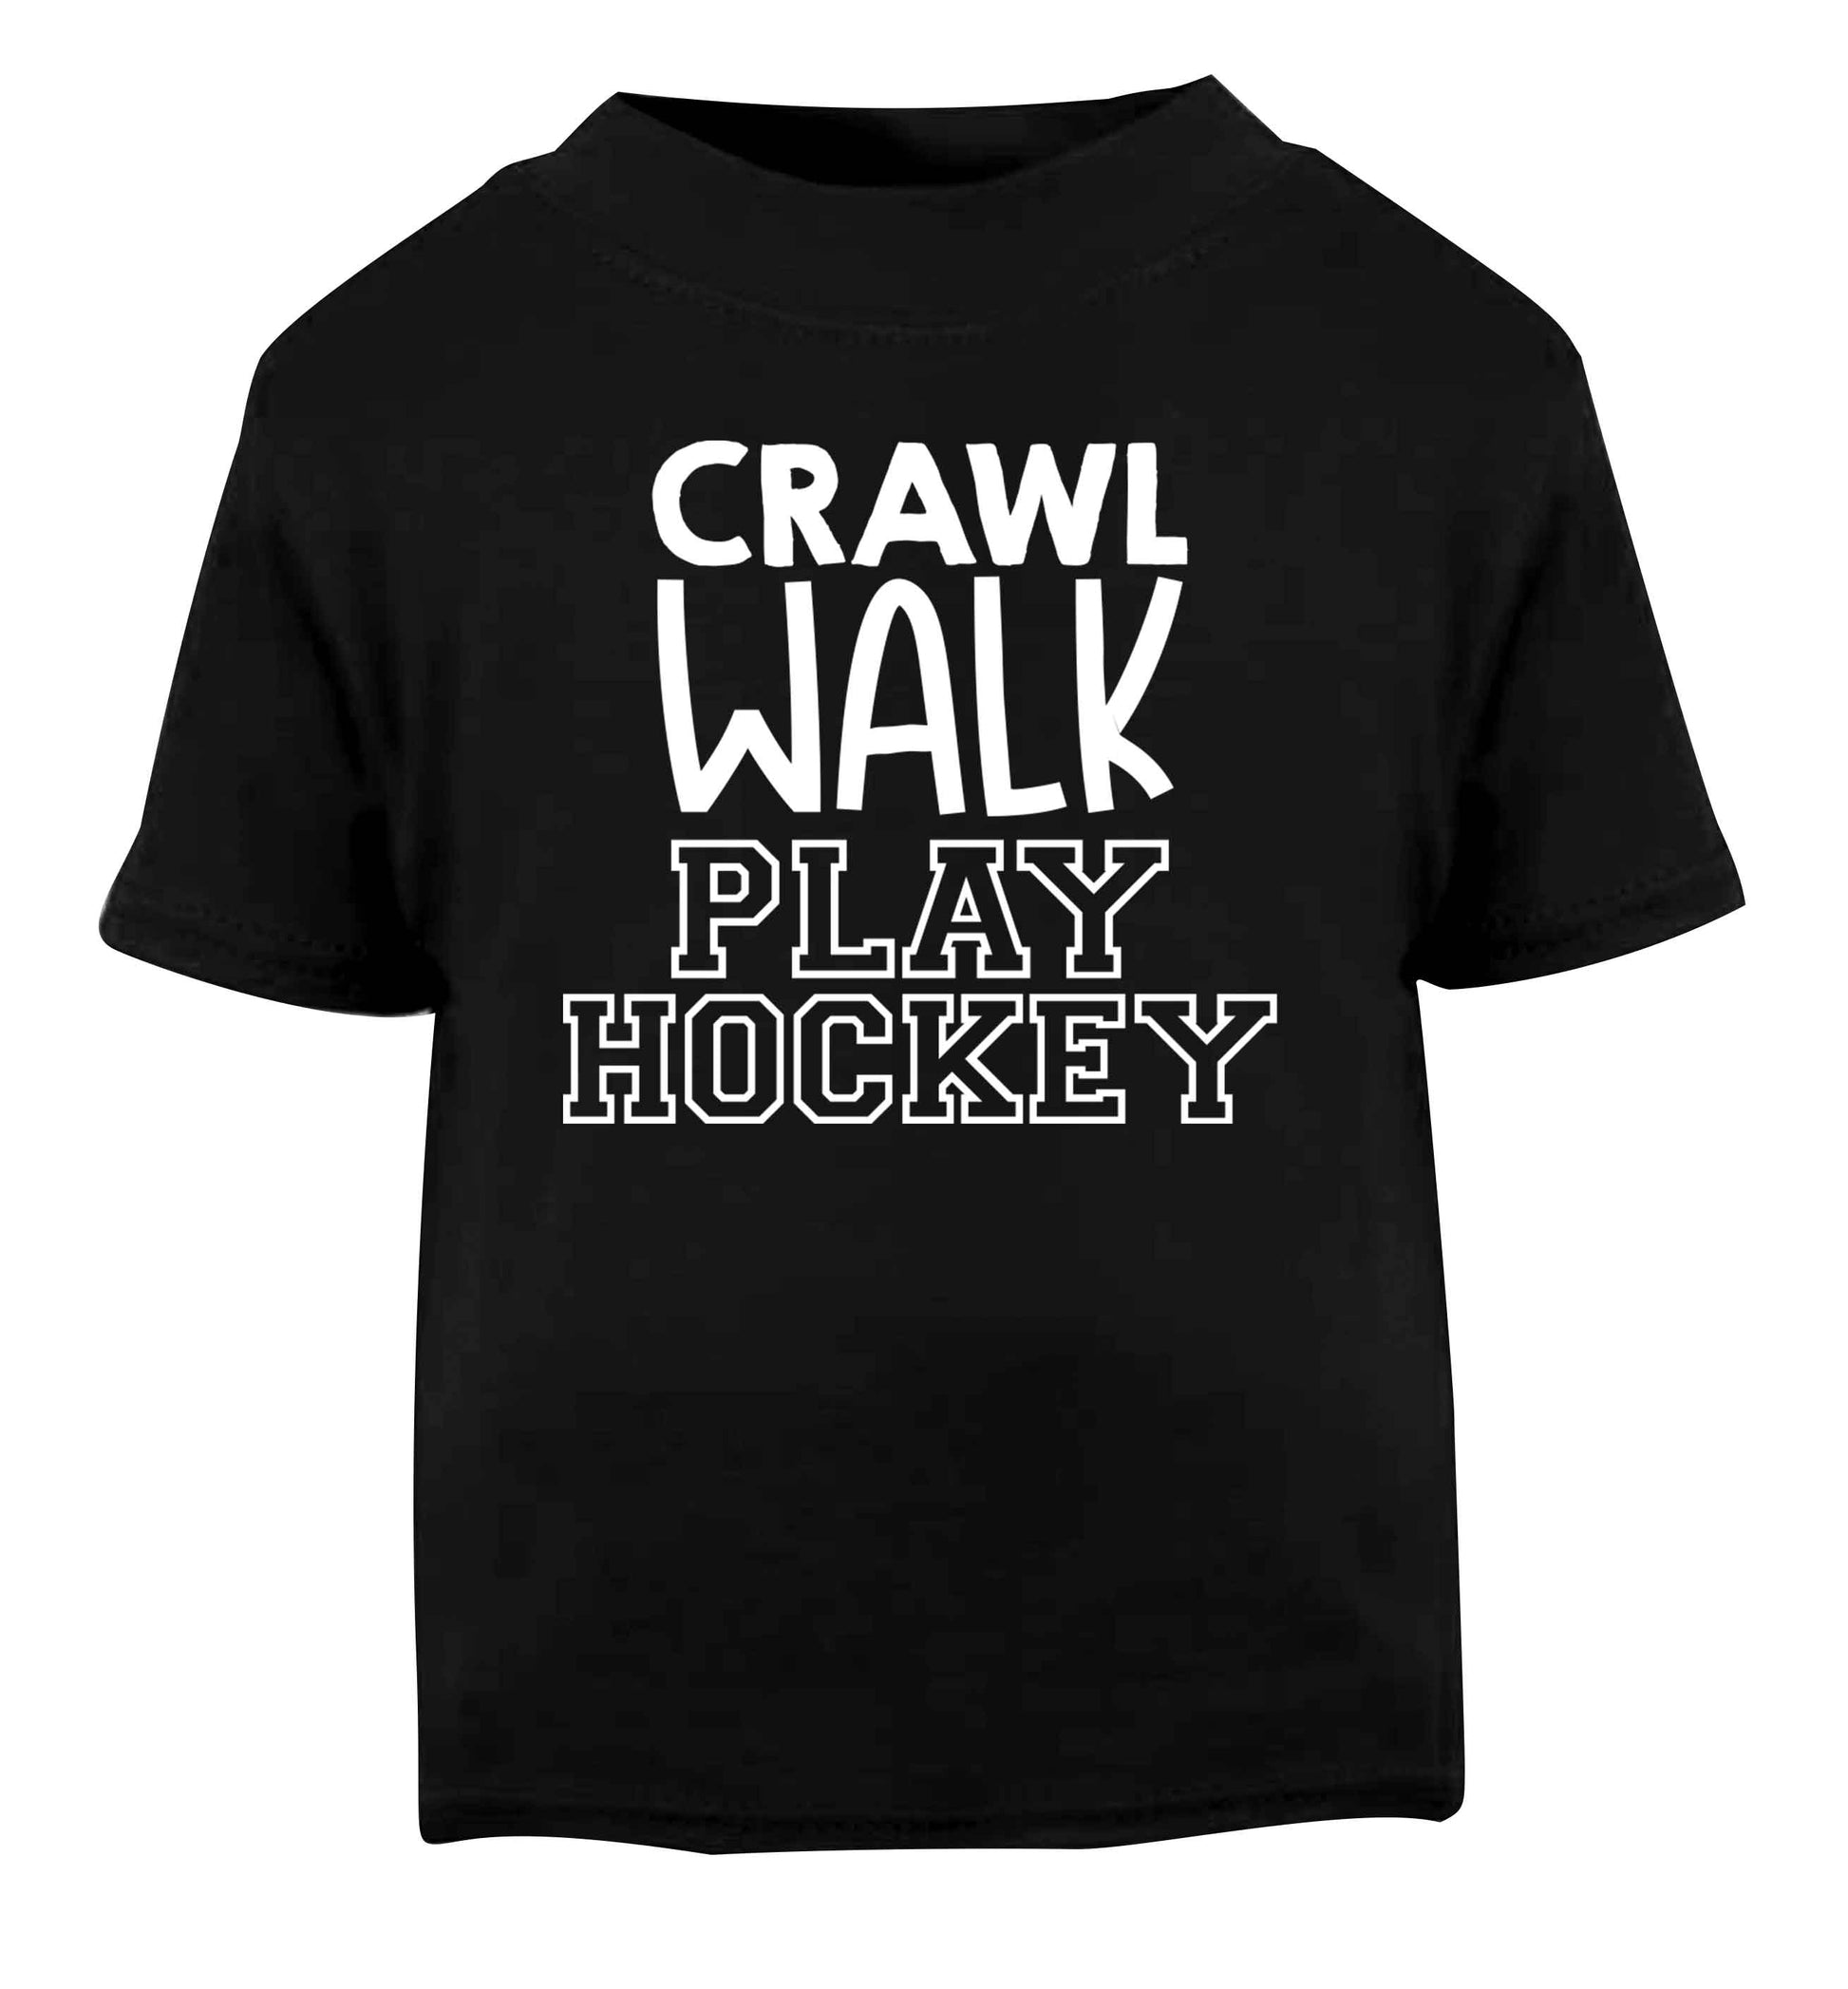 Crawl walk play hockey Black Baby Toddler Tshirt 2 years